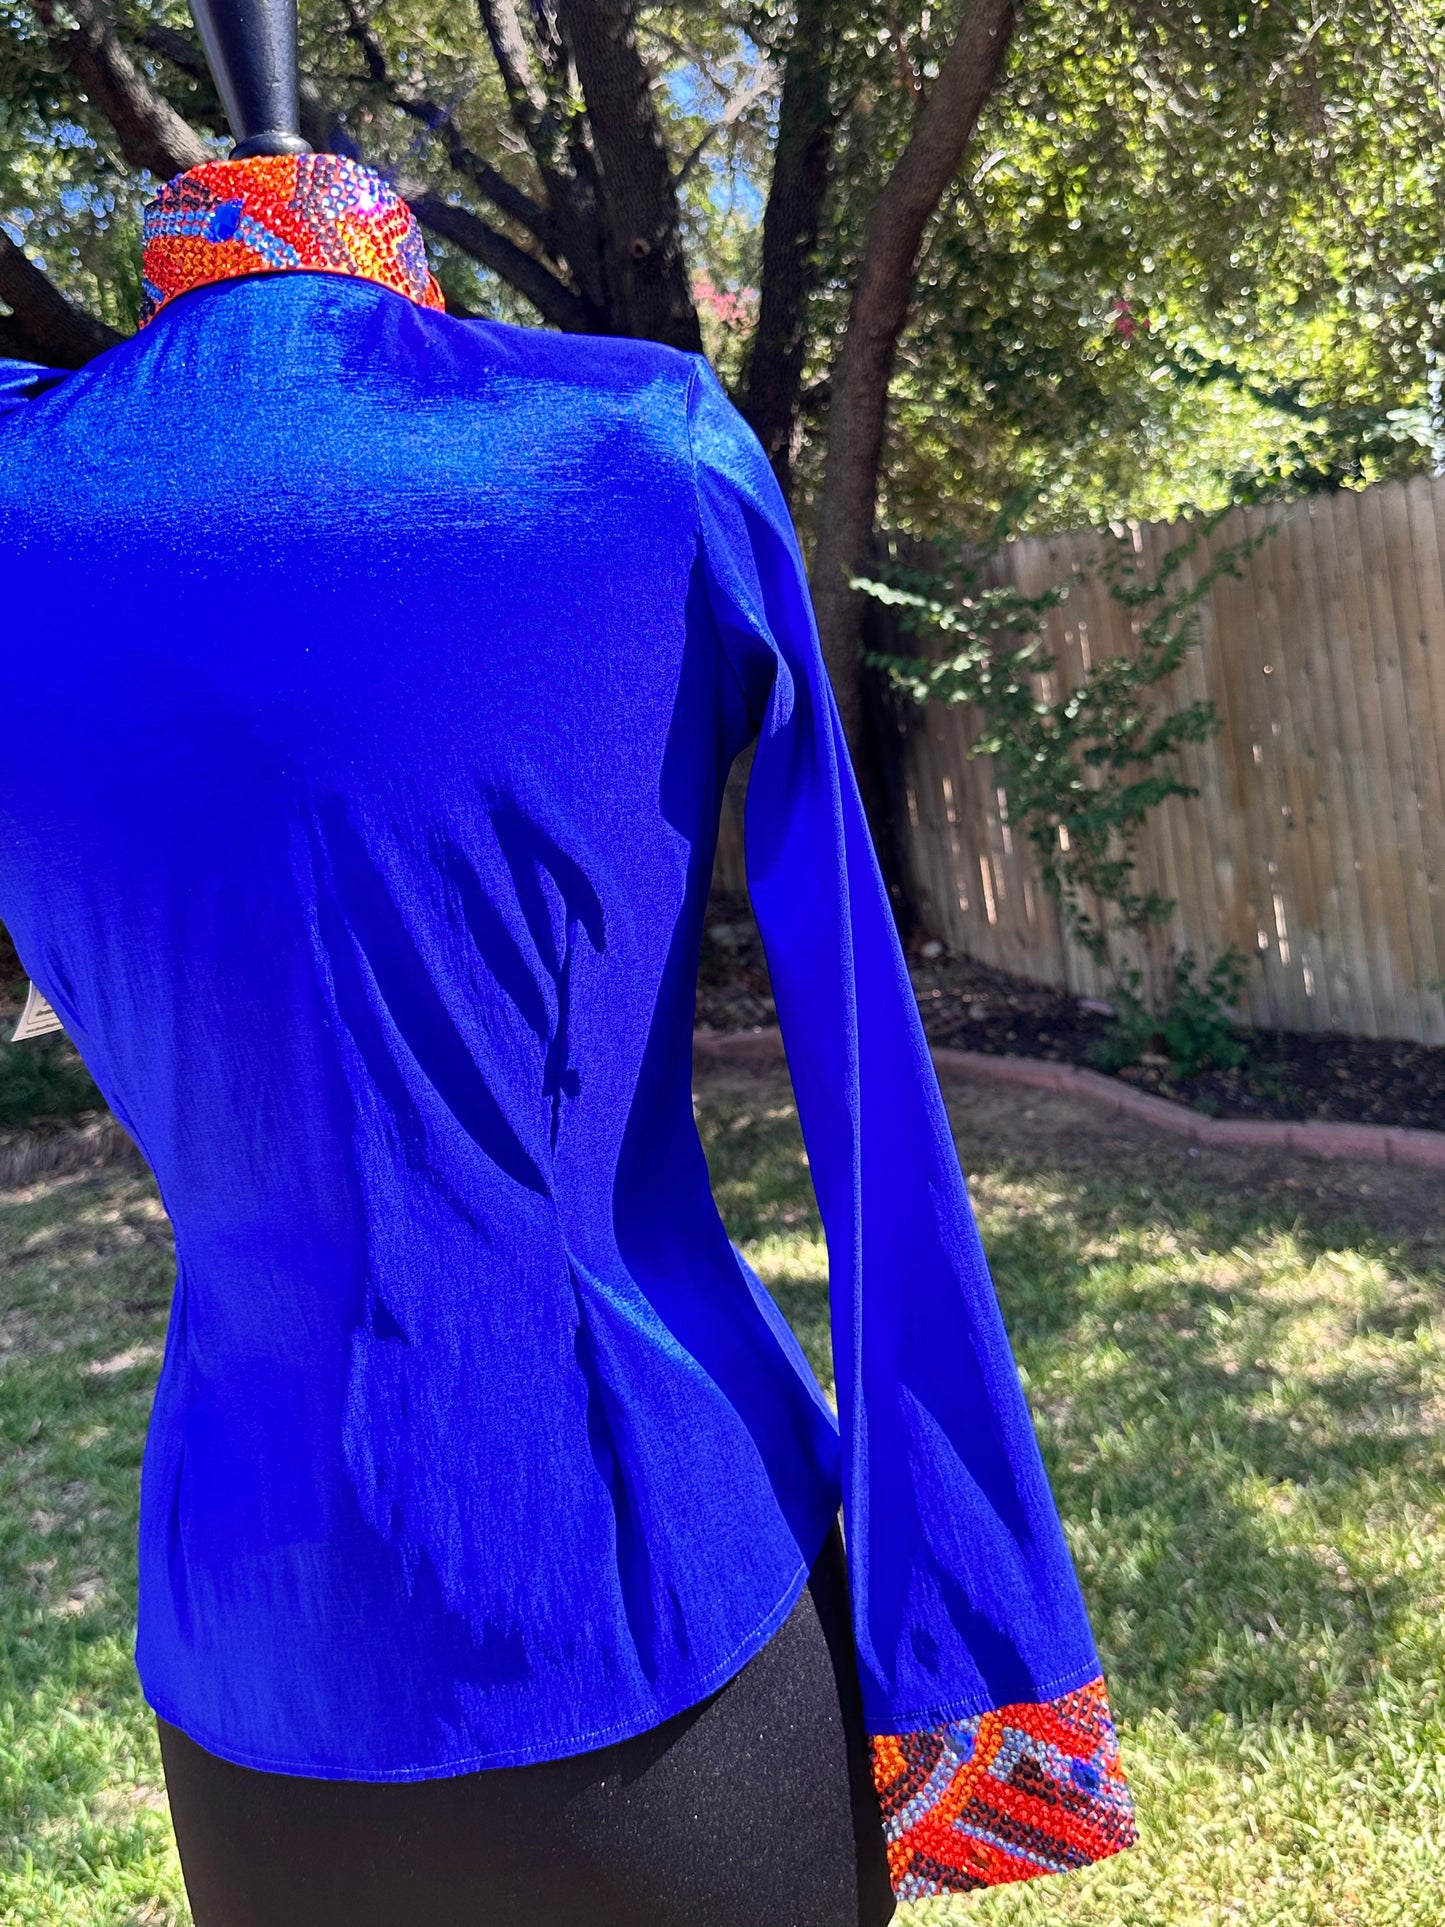 Size small day shirt Royal blue and orange. Hidden zipper.